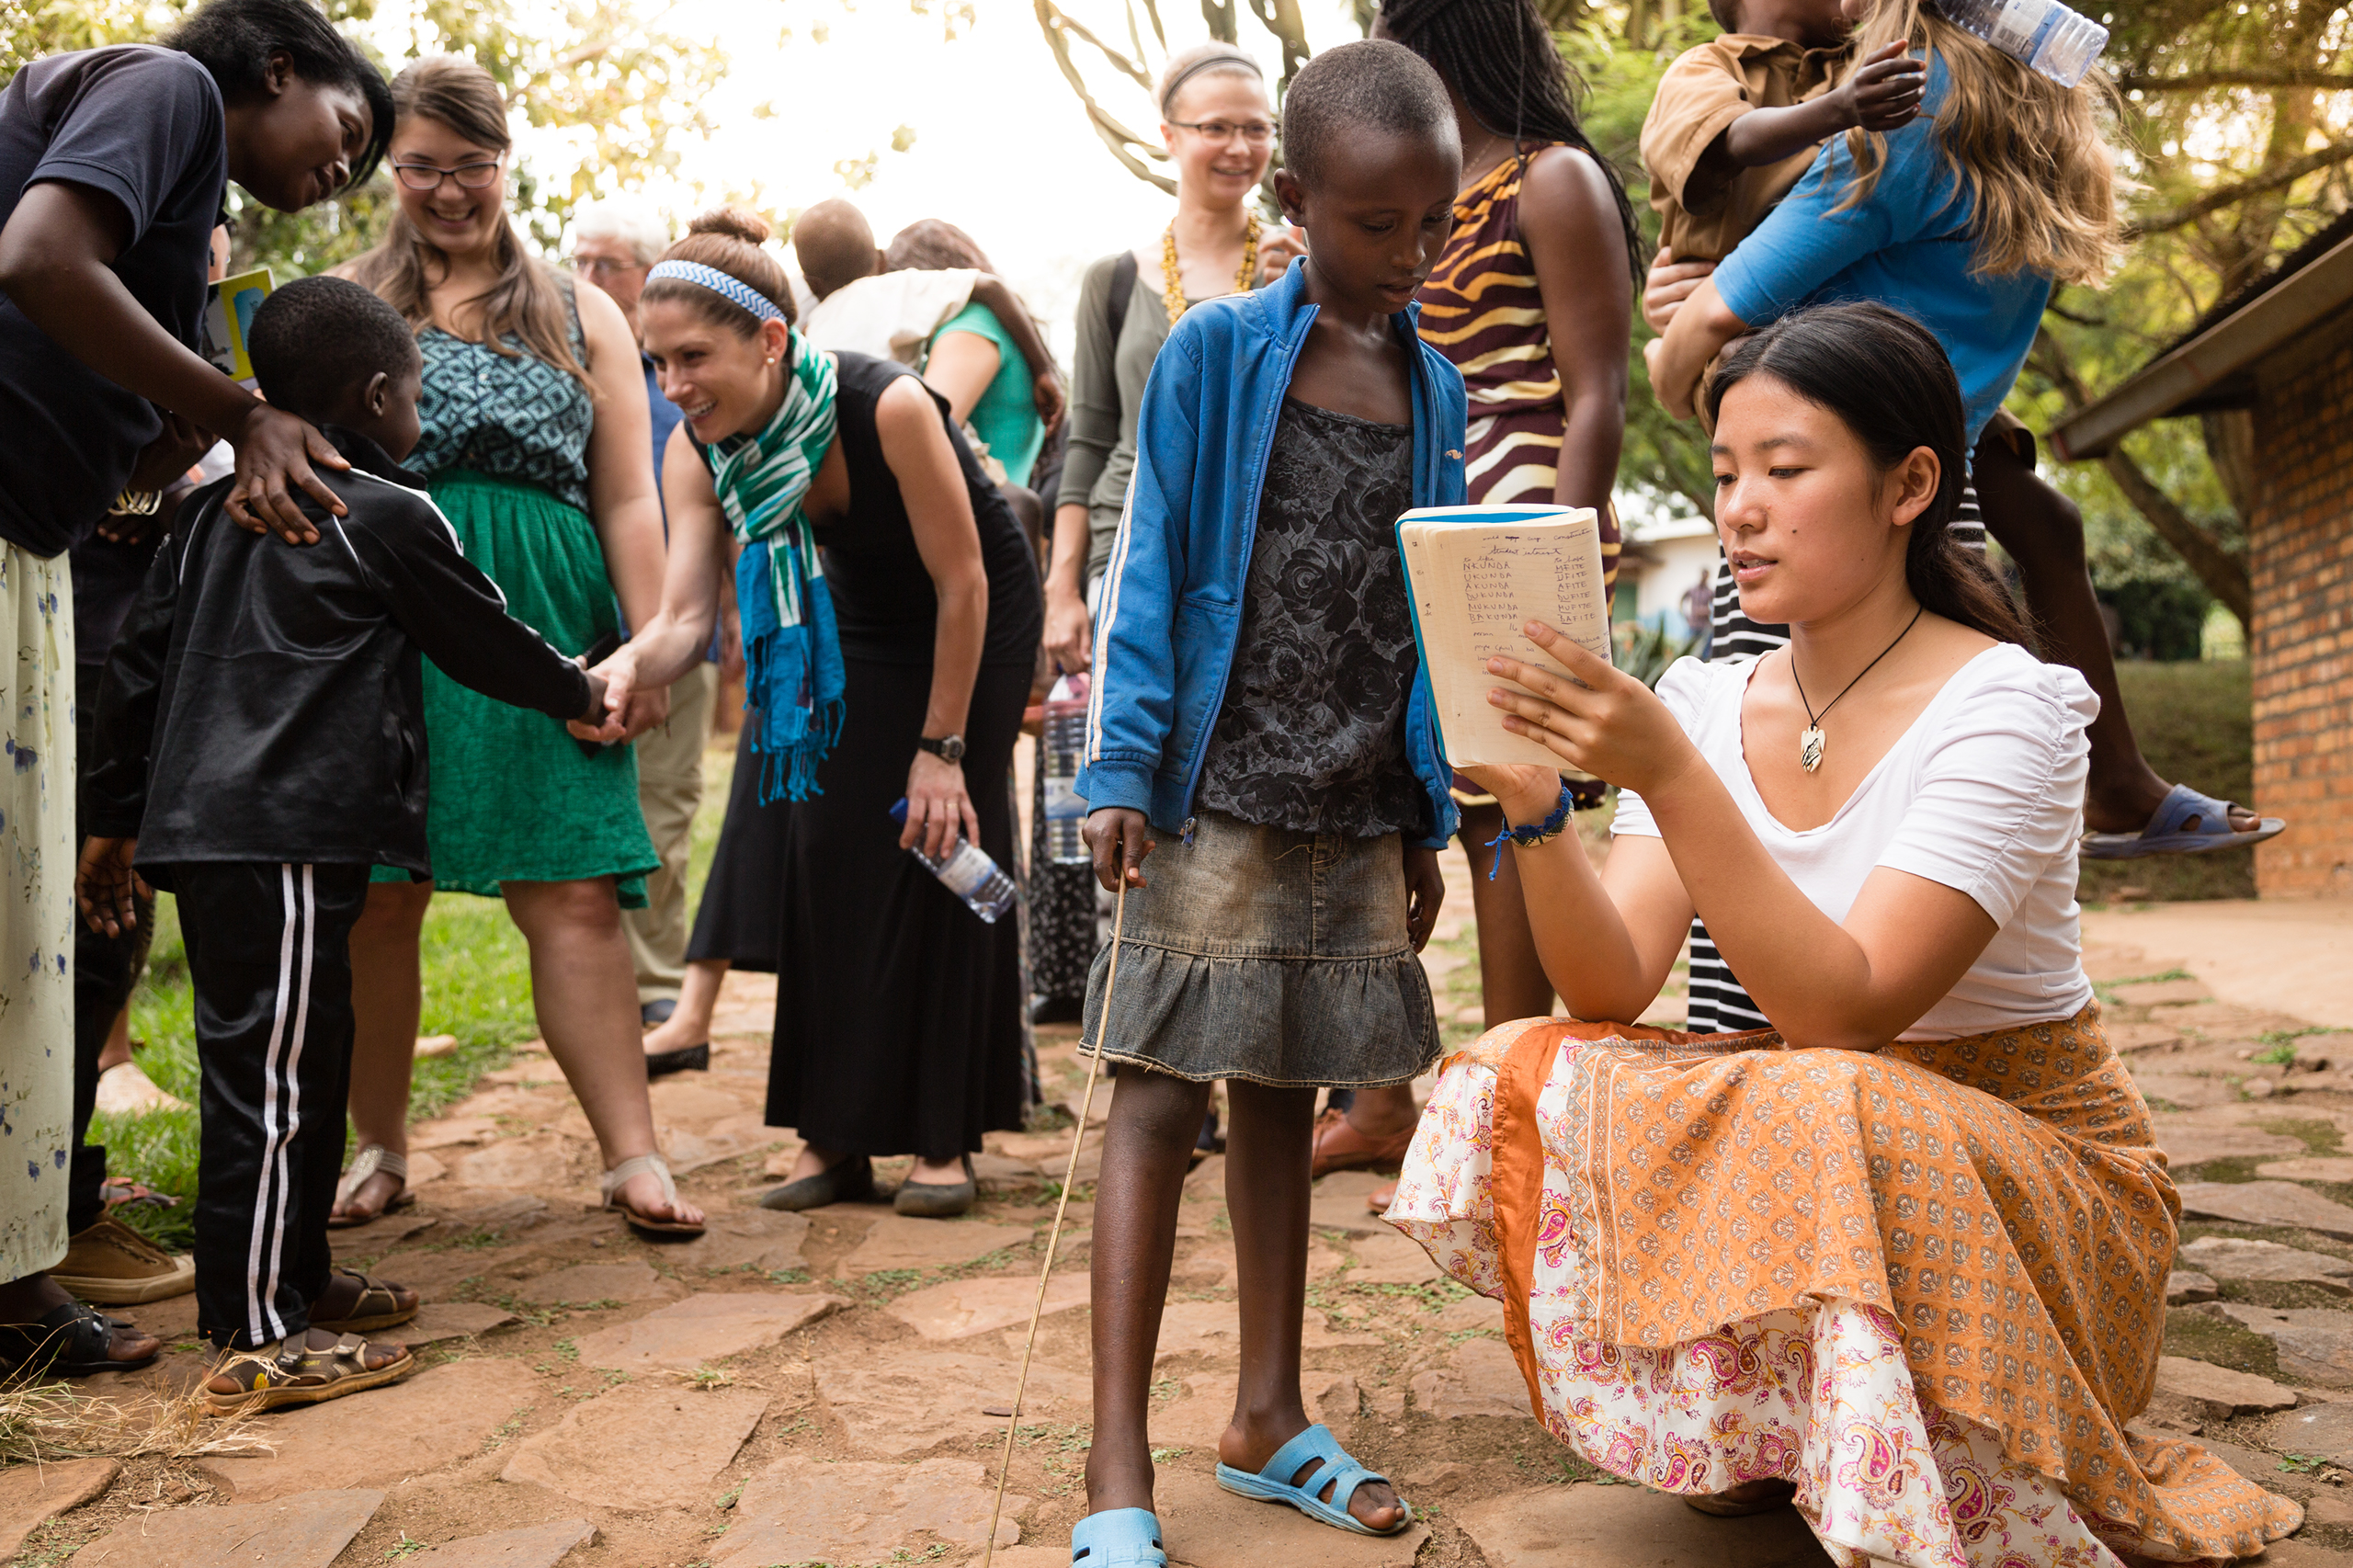 Rollins students visit Rwanda on a field study focused on teaching local schoolkids.